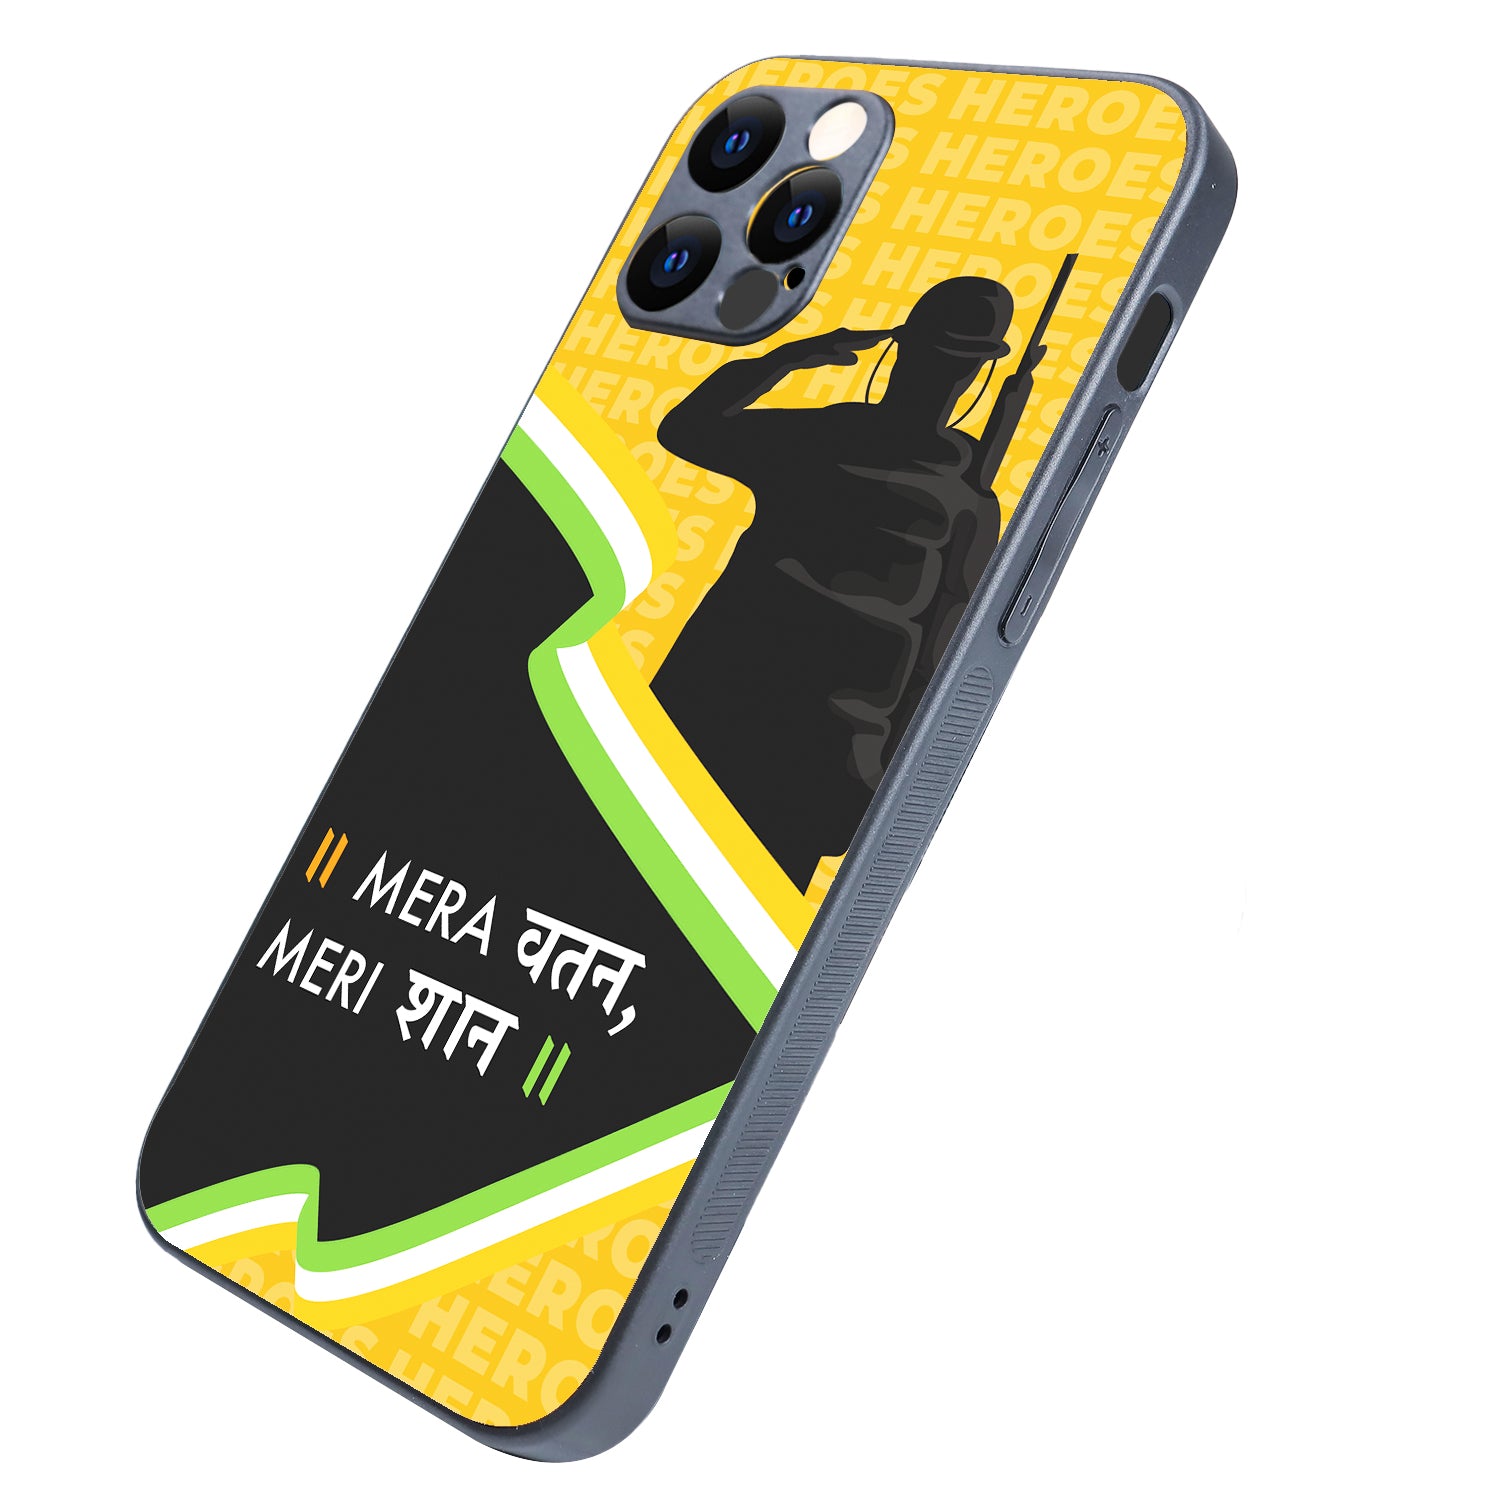 Mere Watan Indian iPhone 12 Pro Case